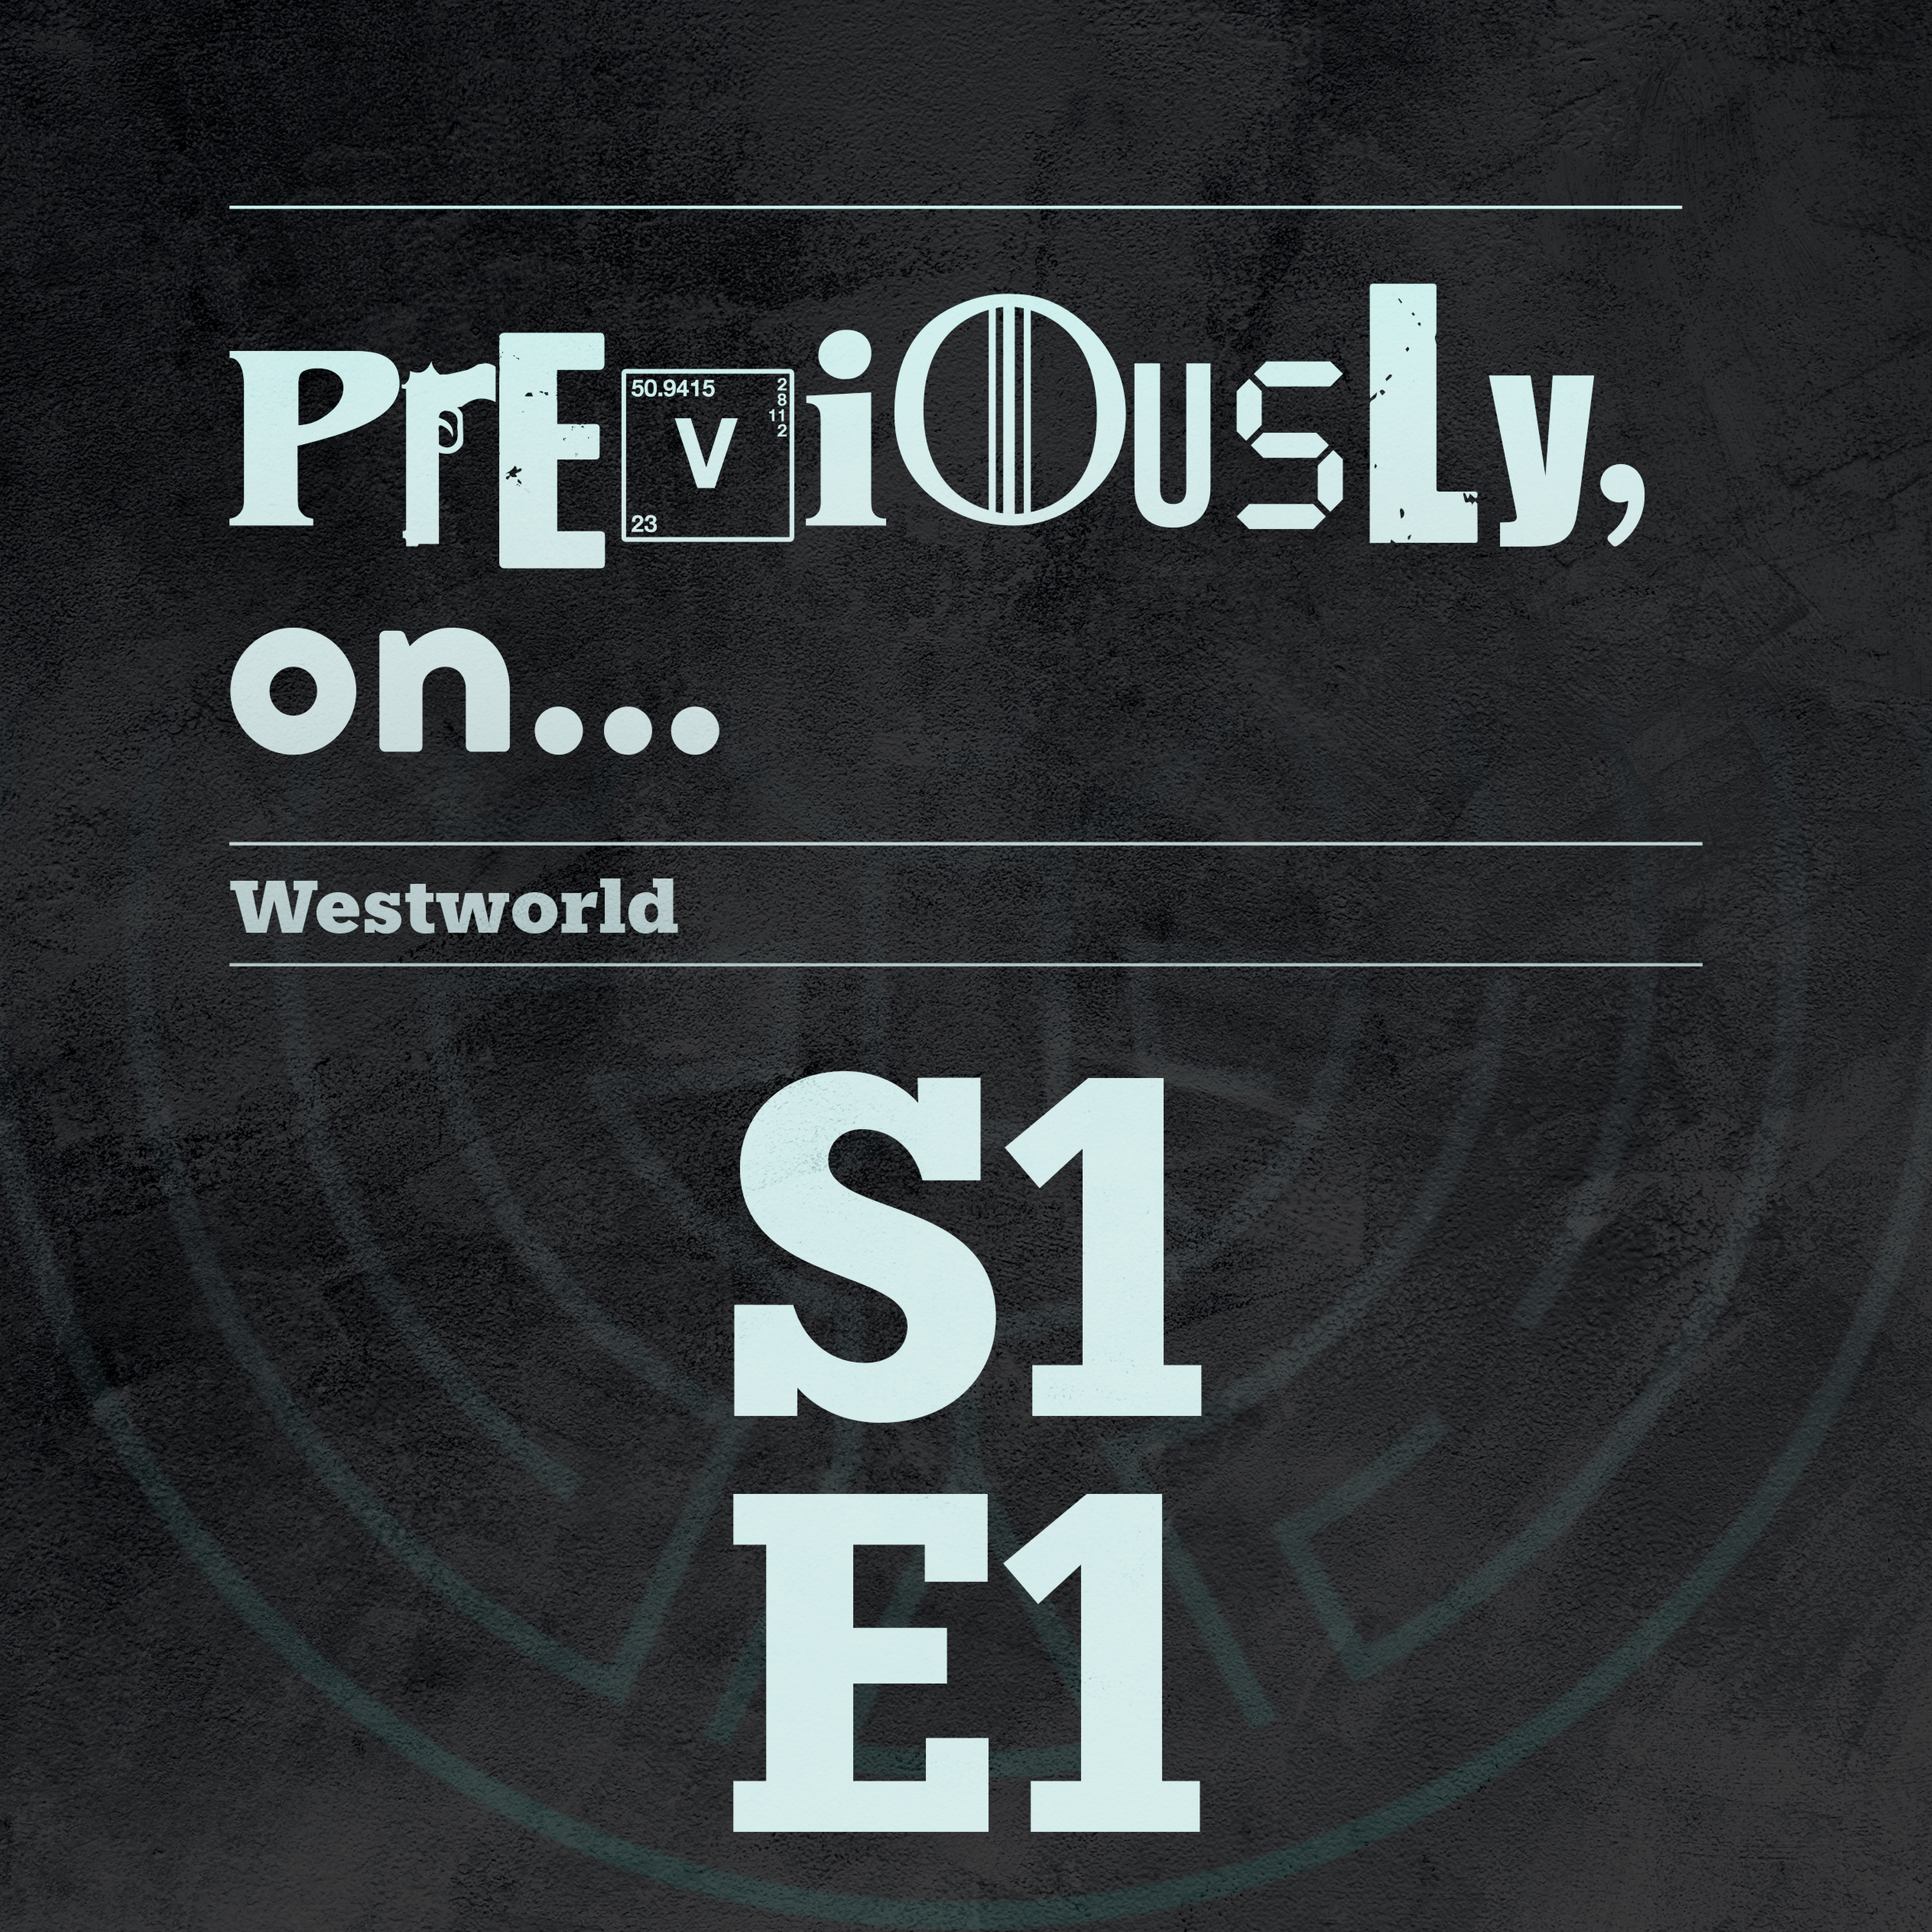 Westworld S1 E1 recap